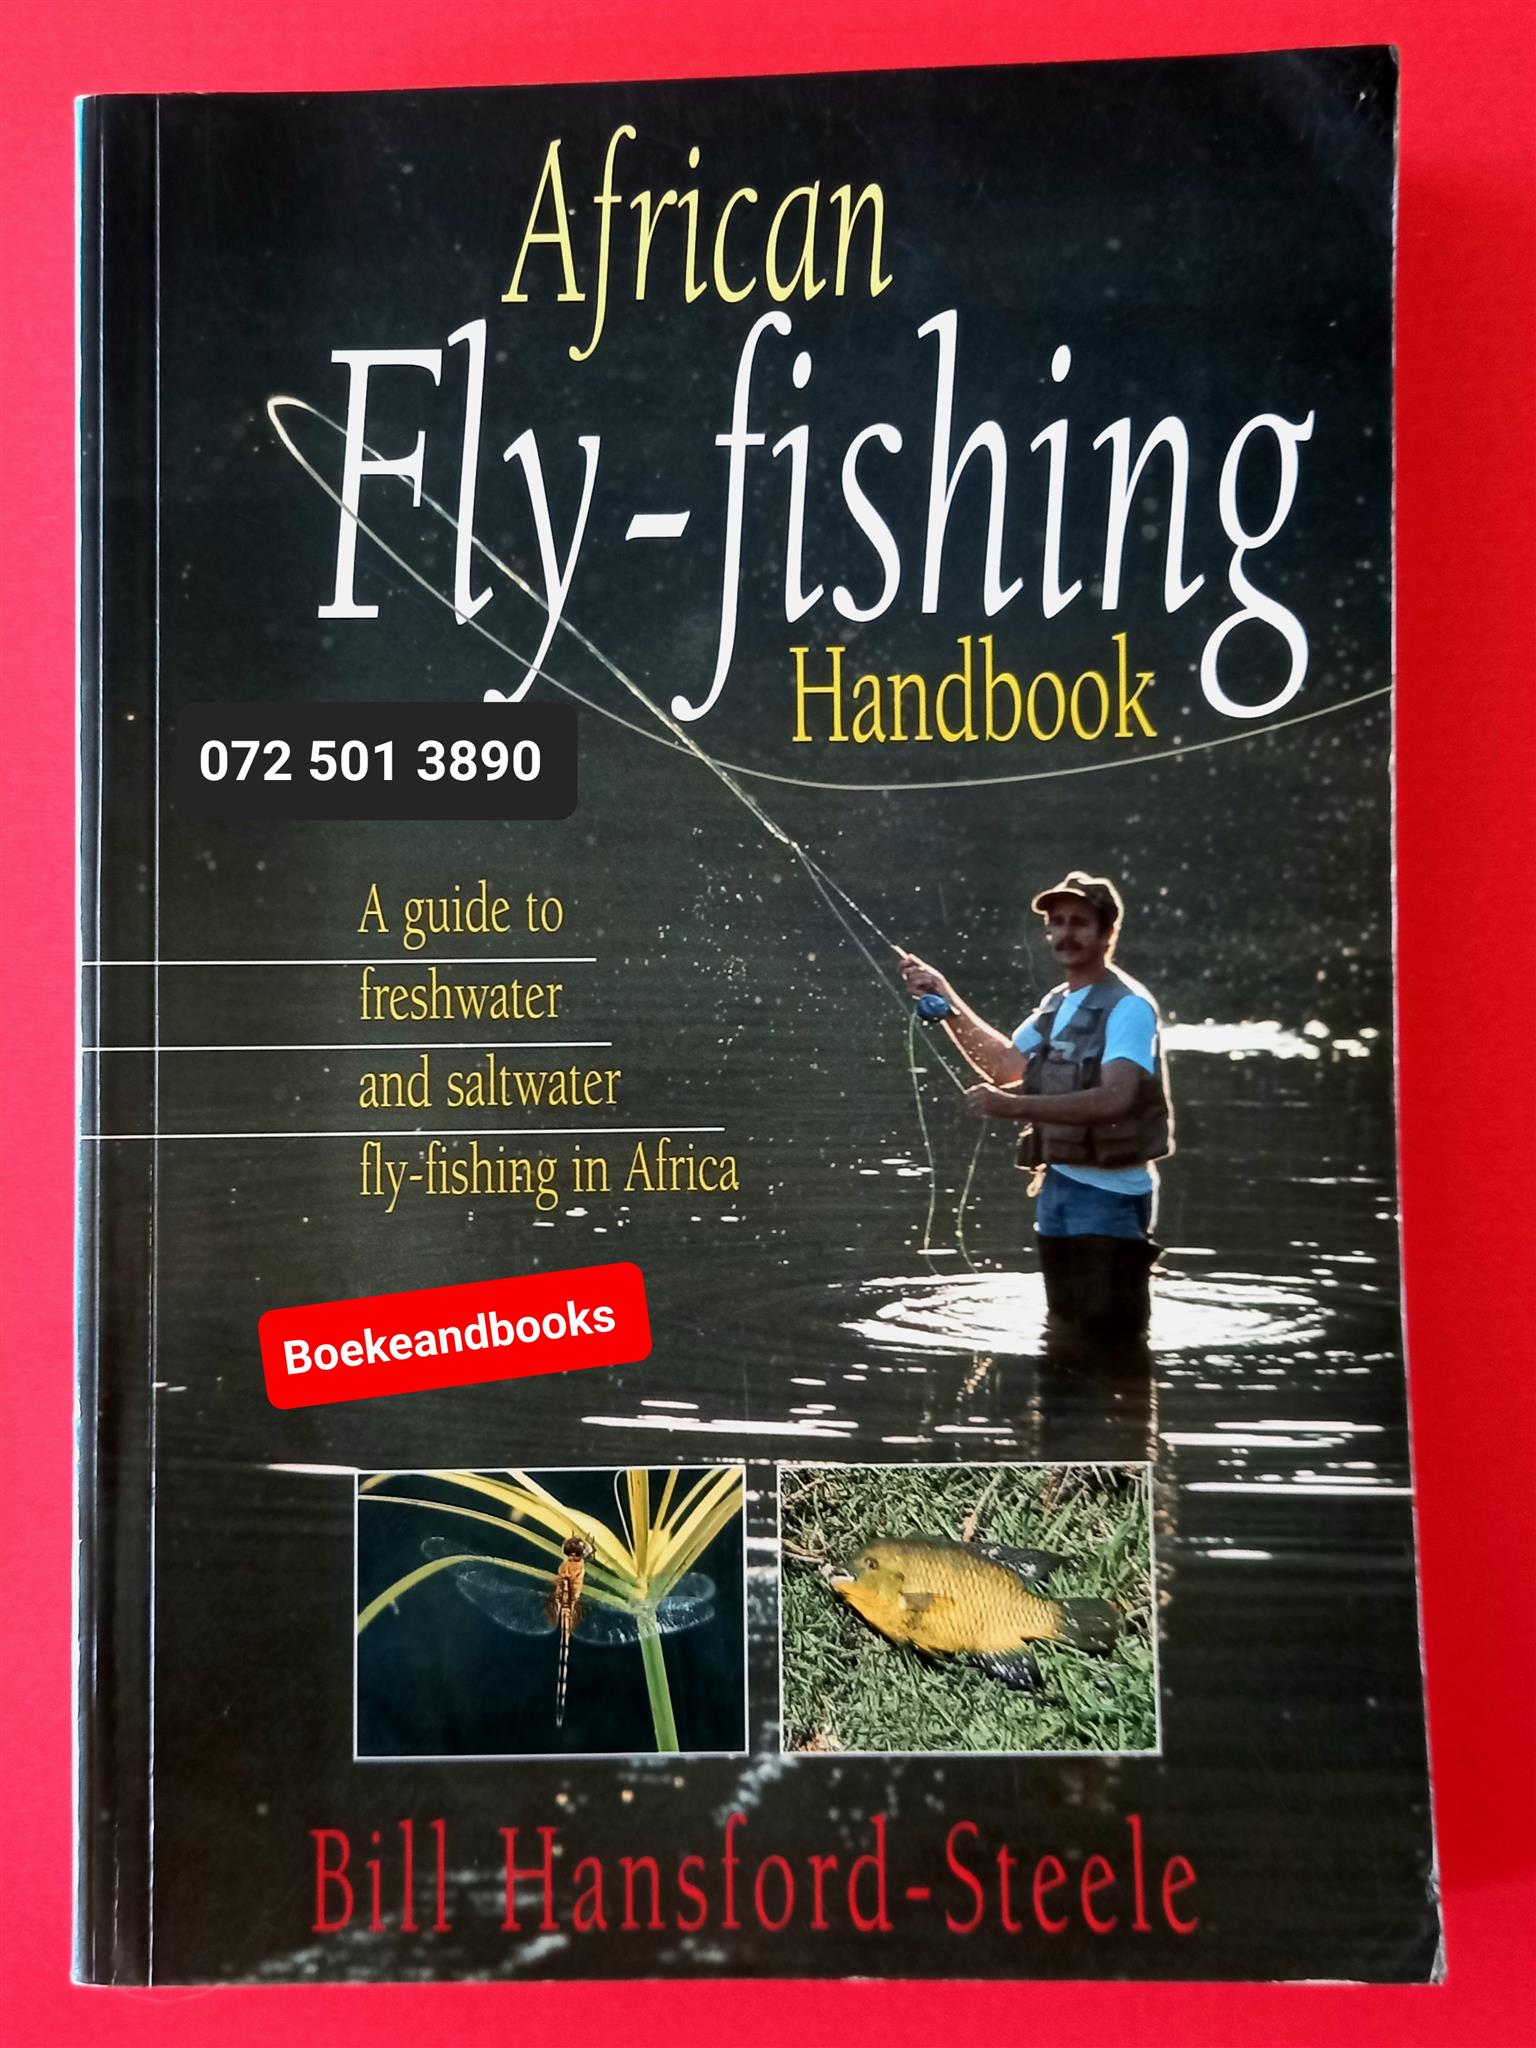 African Fly-Fishing Handbook - Bill Hansford-Steele.